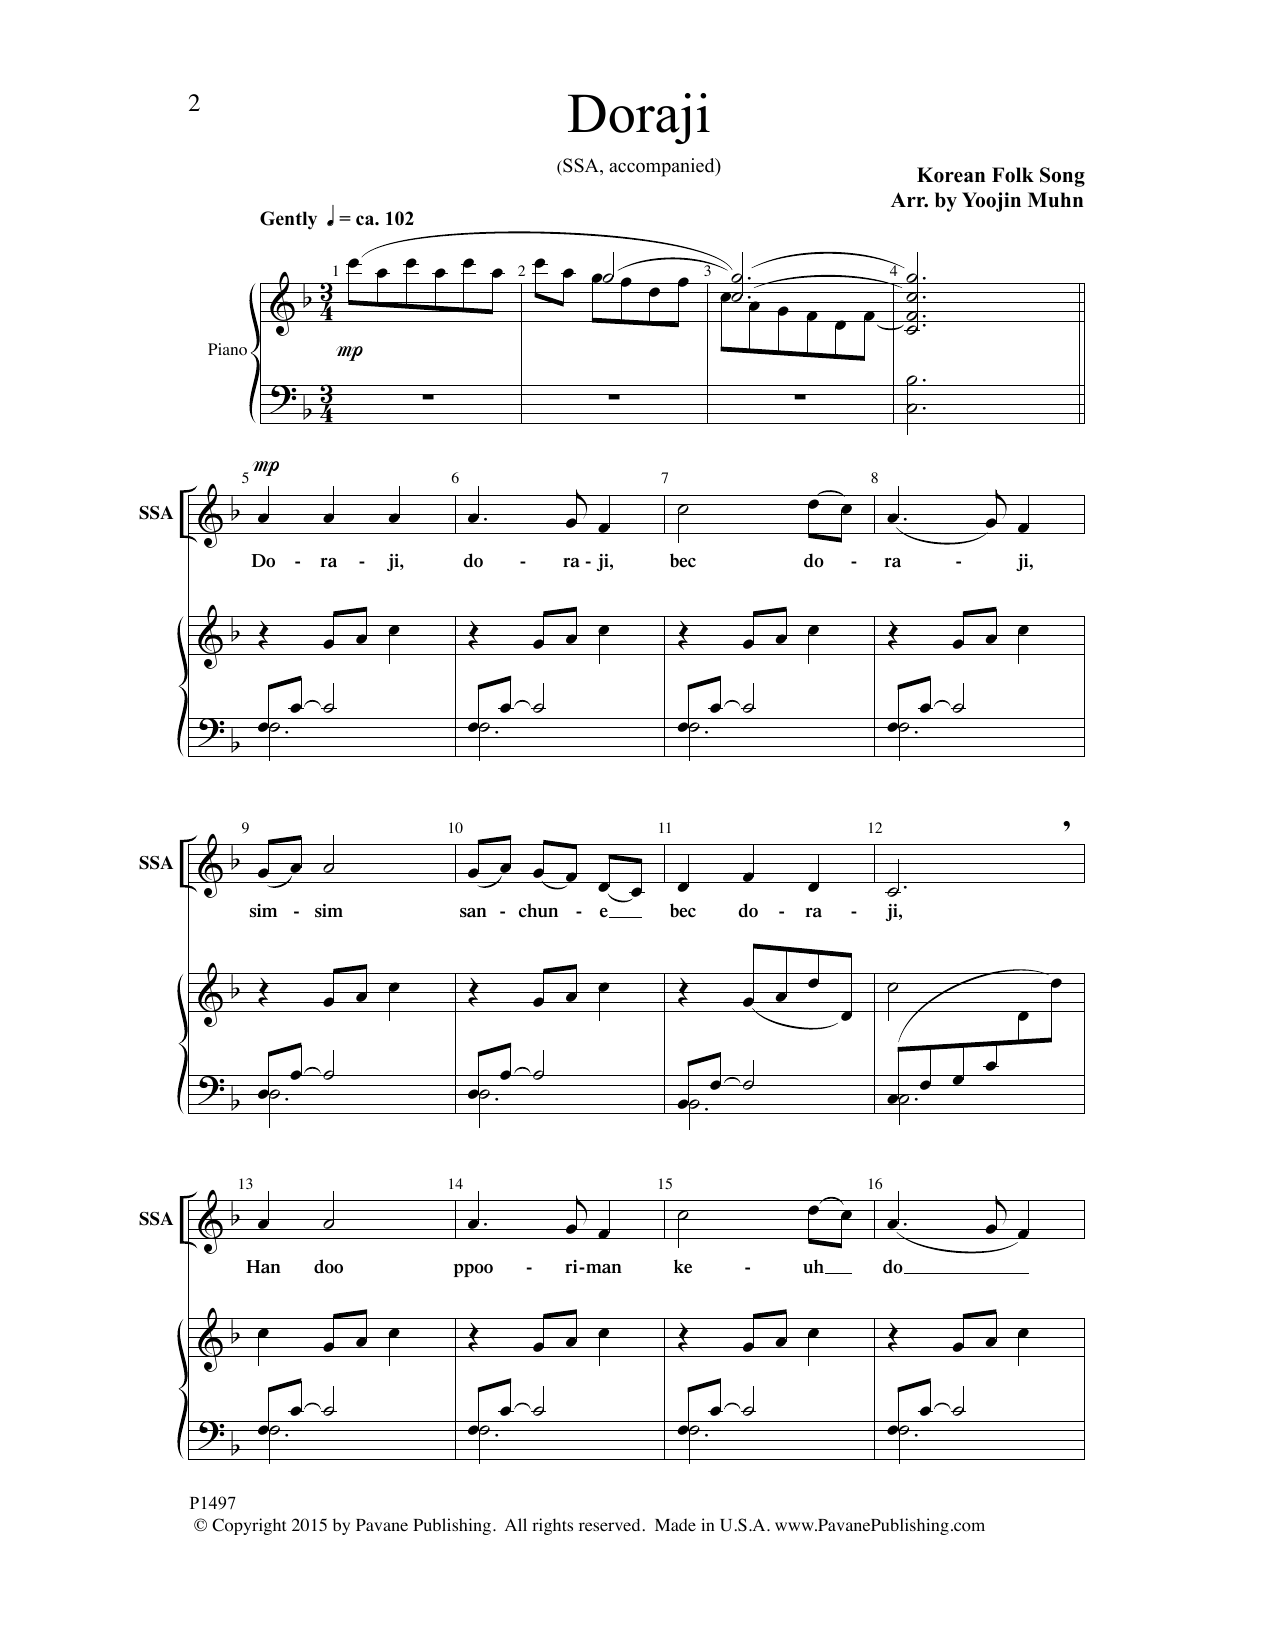 Download Yoojin Muhn Doraji Sheet Music and learn how to play SSA Choir PDF digital score in minutes